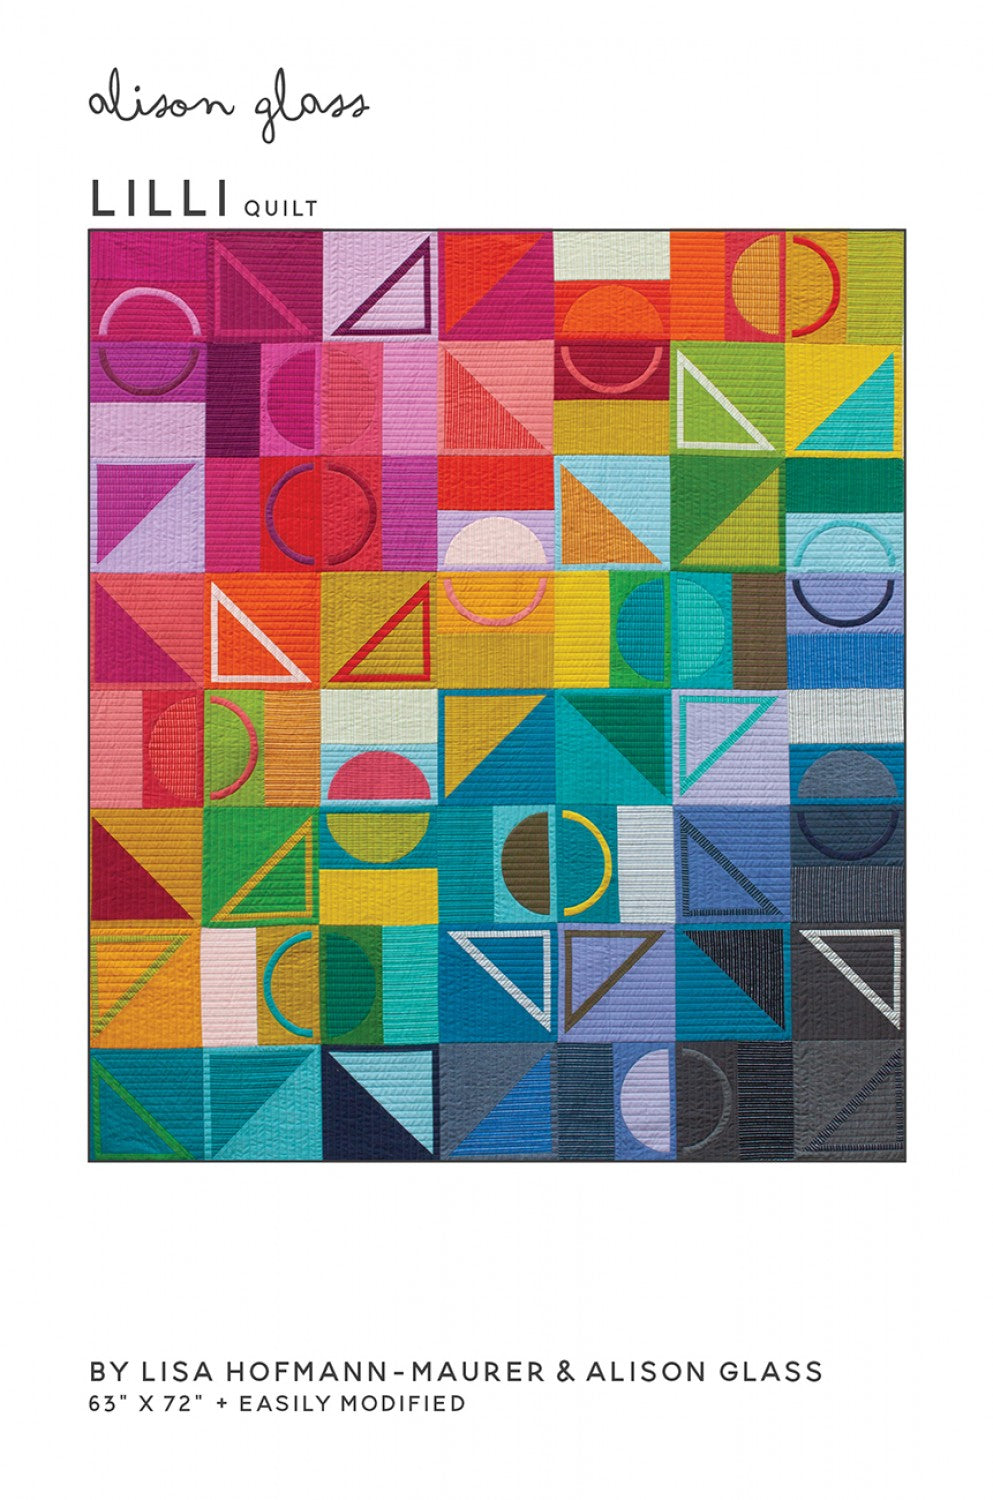 Swell Quilt mönster - Lisa Hofman-Maurer & Alison Glass